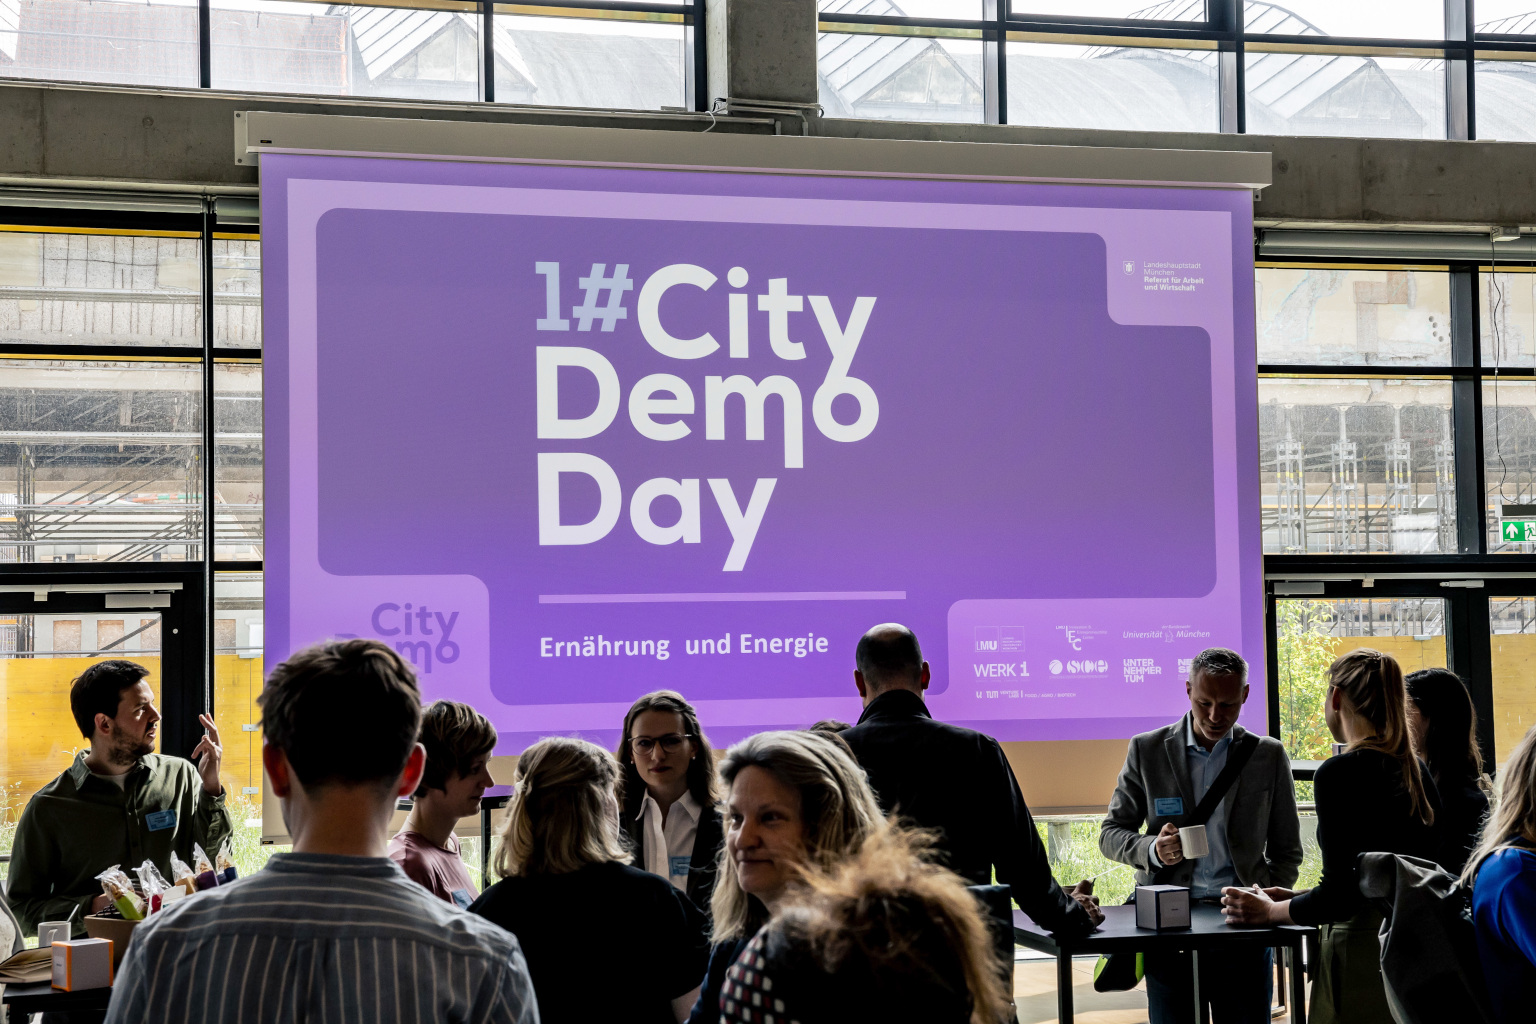 City Demo Day #1